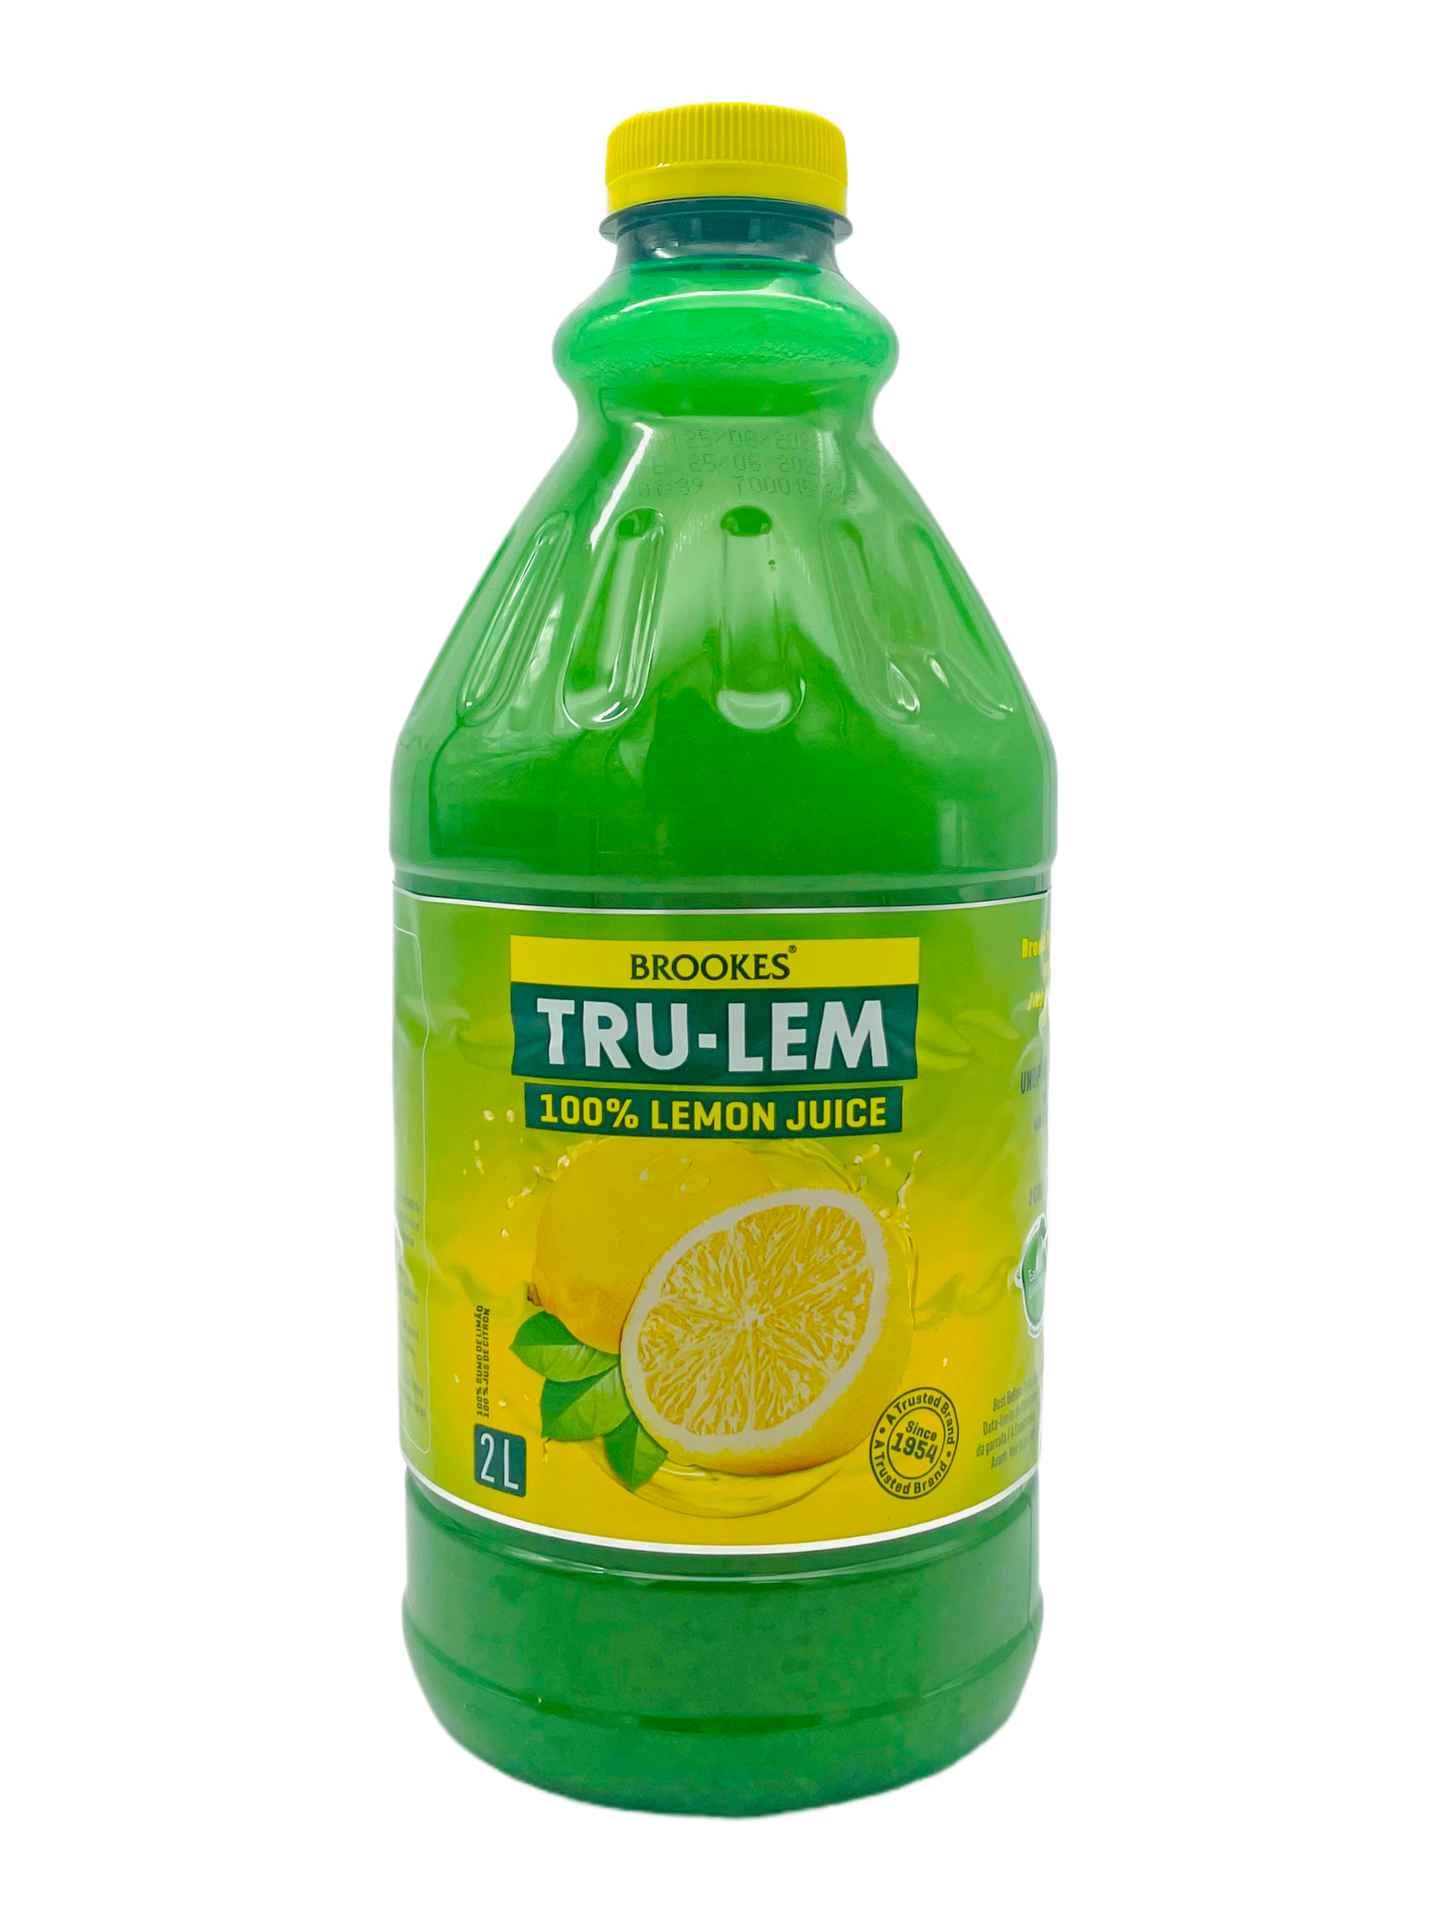 Brookes - Trul-lem 100& Lemon Juice